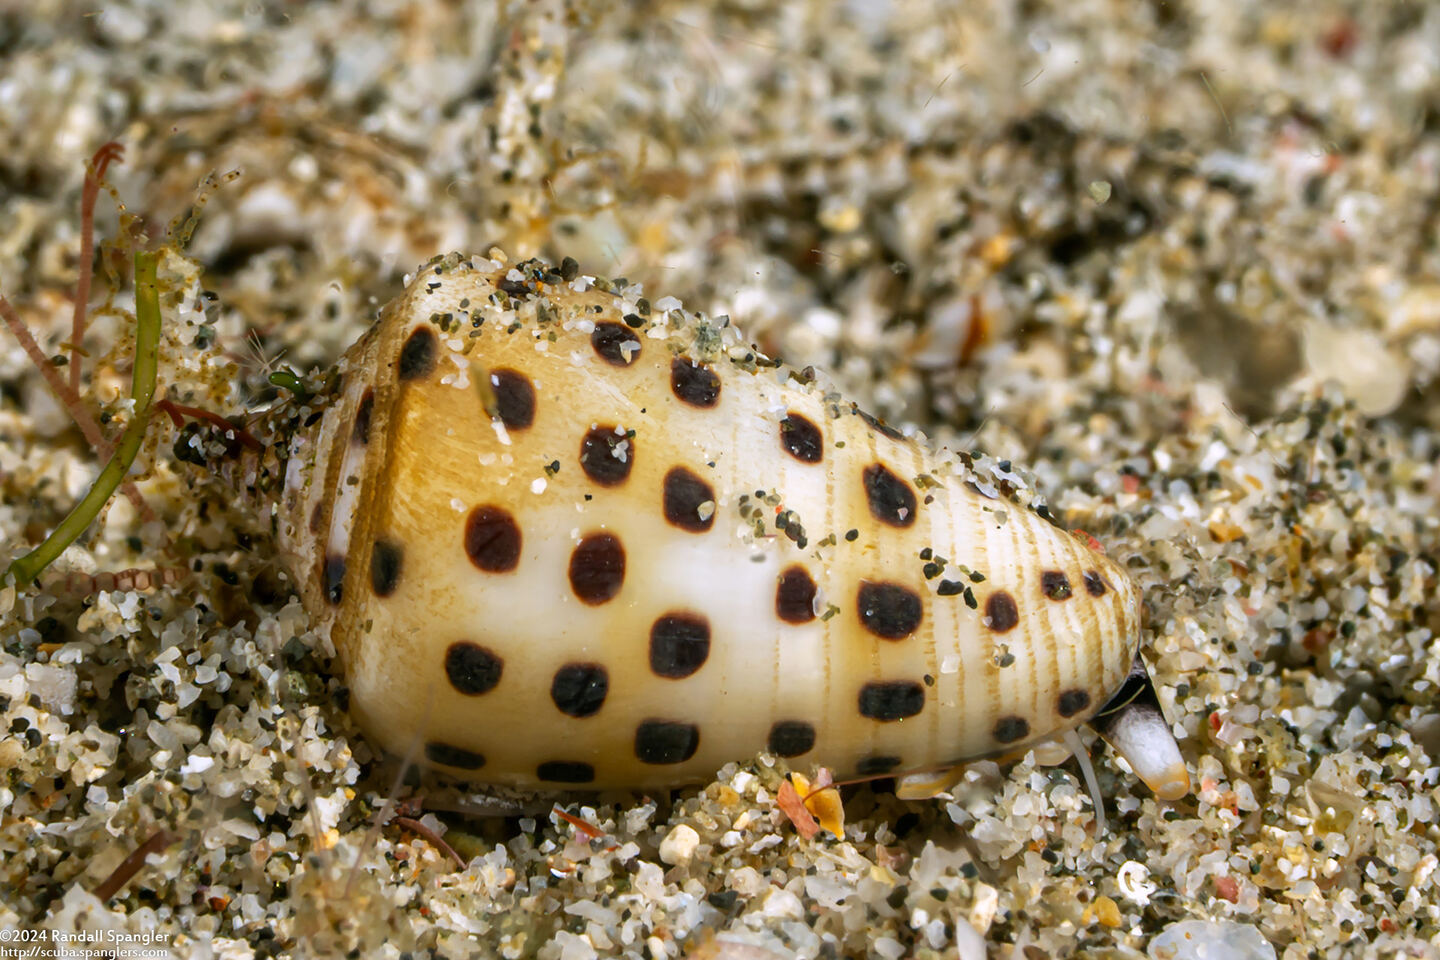 Conus pulicarius (Flea Cone)